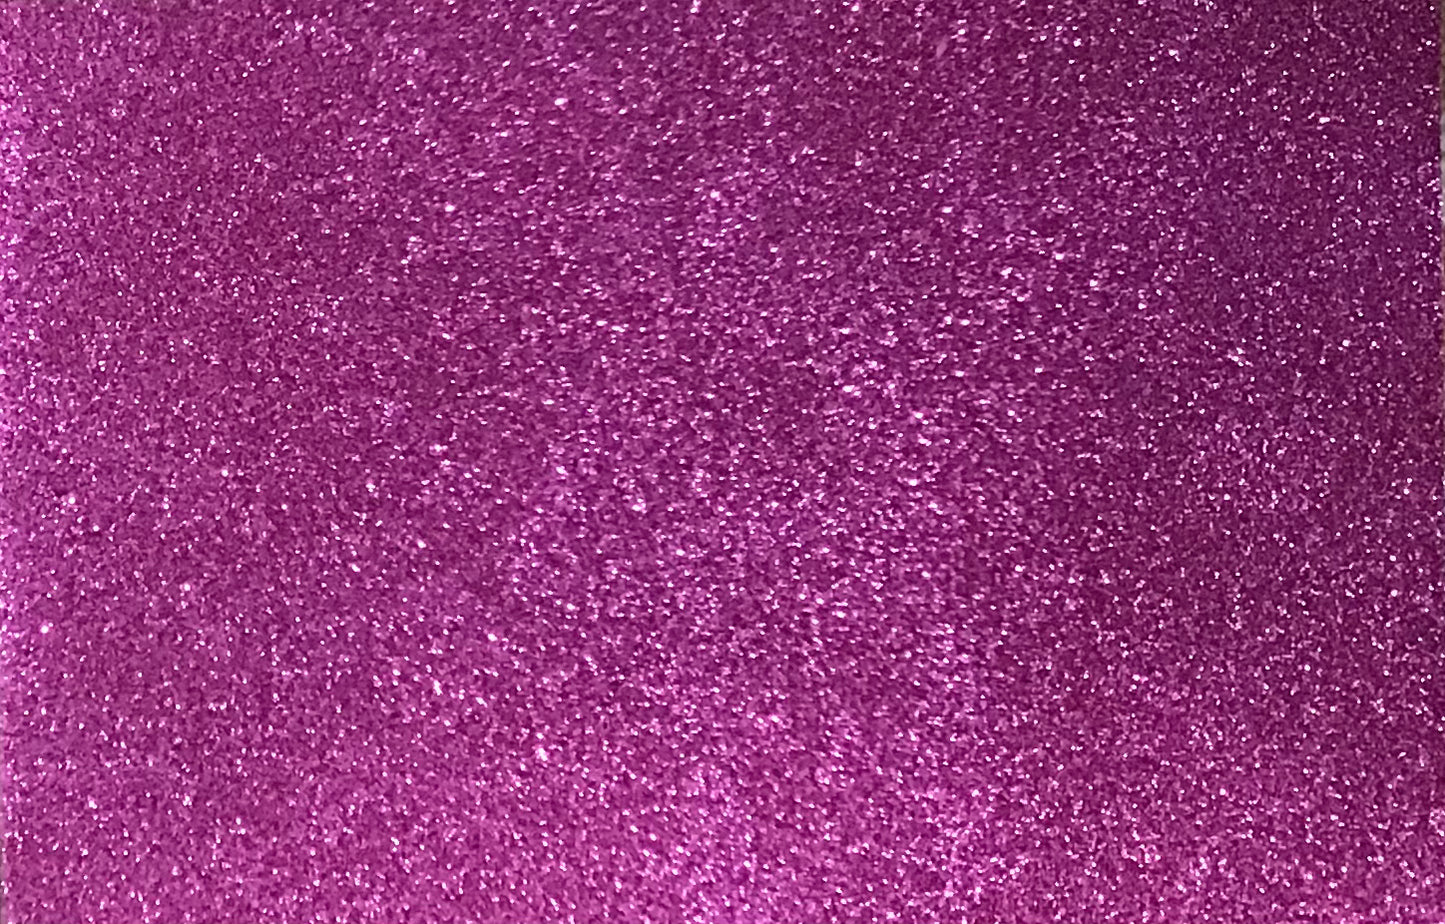 Craft Foam Glitter Pinkish Mauve - Size Approx 30 x 20cm - Thickness Approx 1.5mm